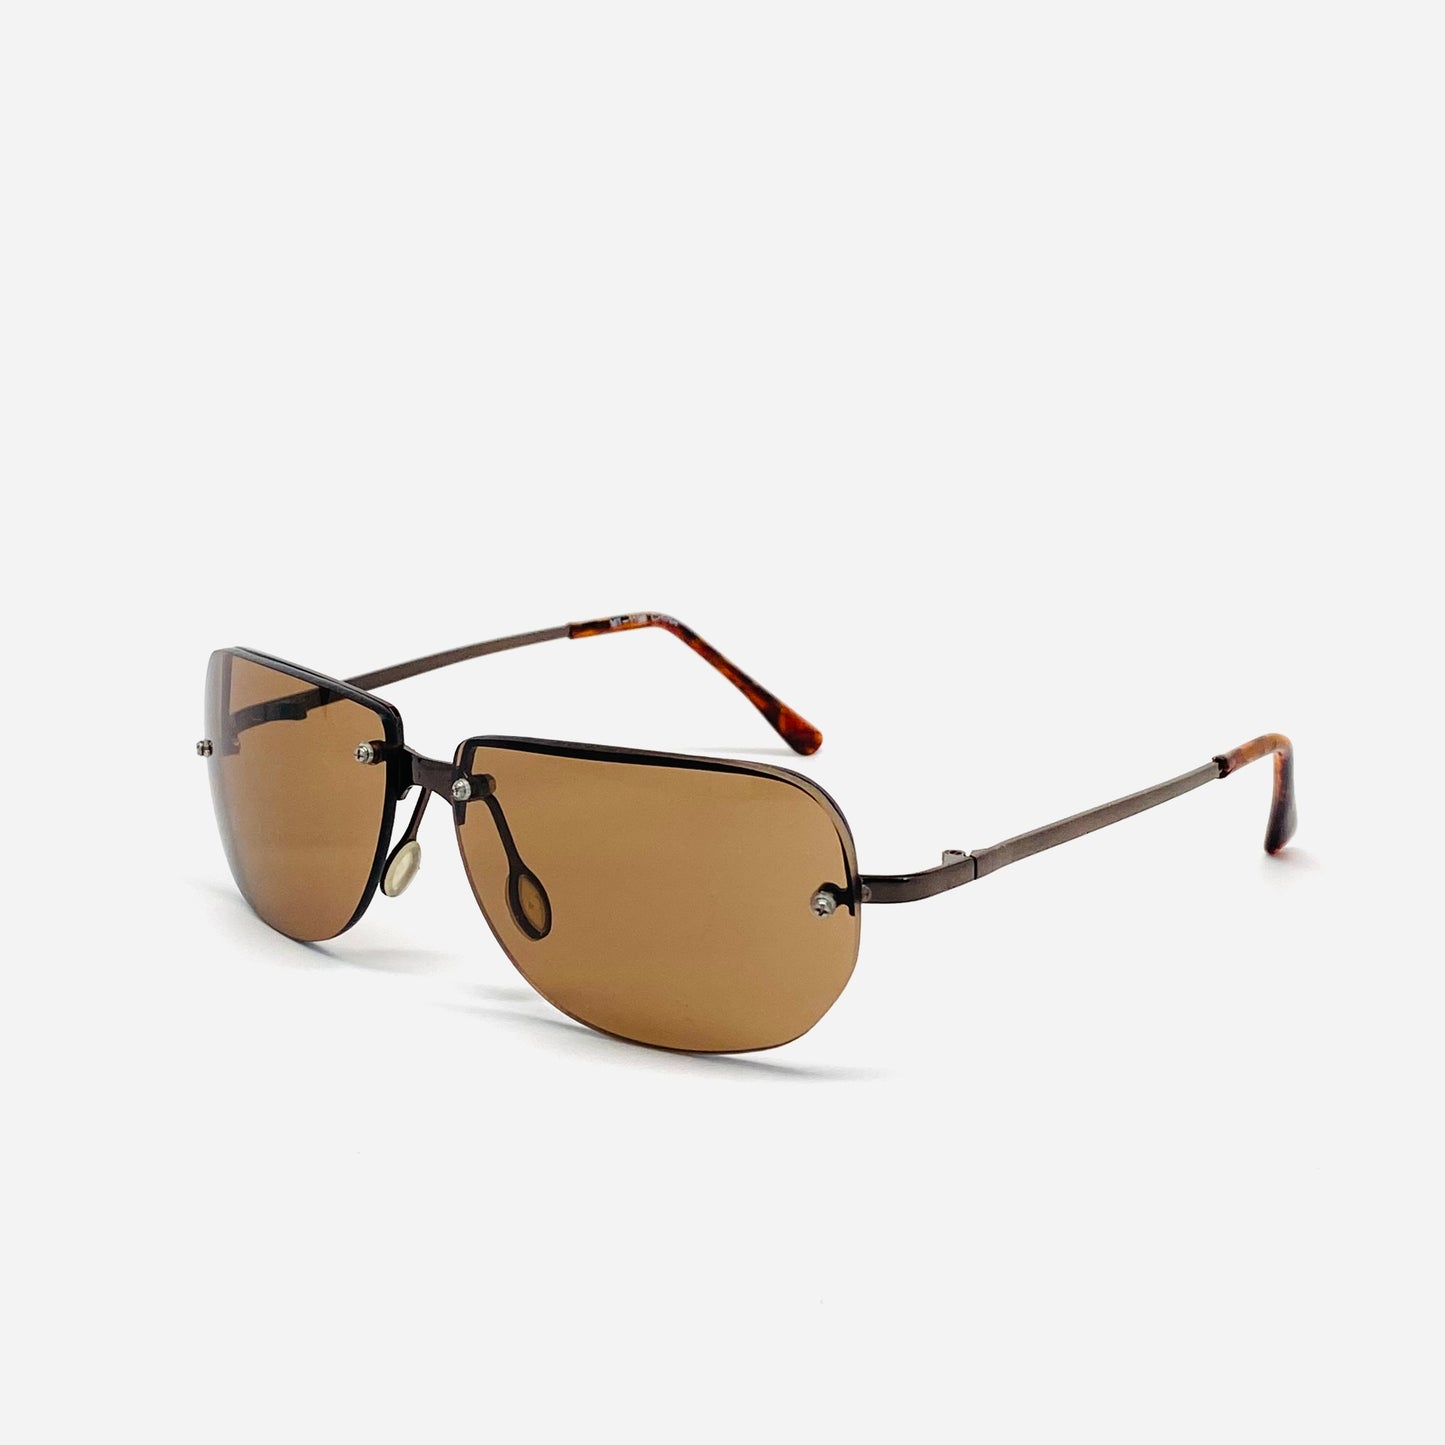 Vintage Standard Sized Frameless Moon Shape Sunglasses - Brown